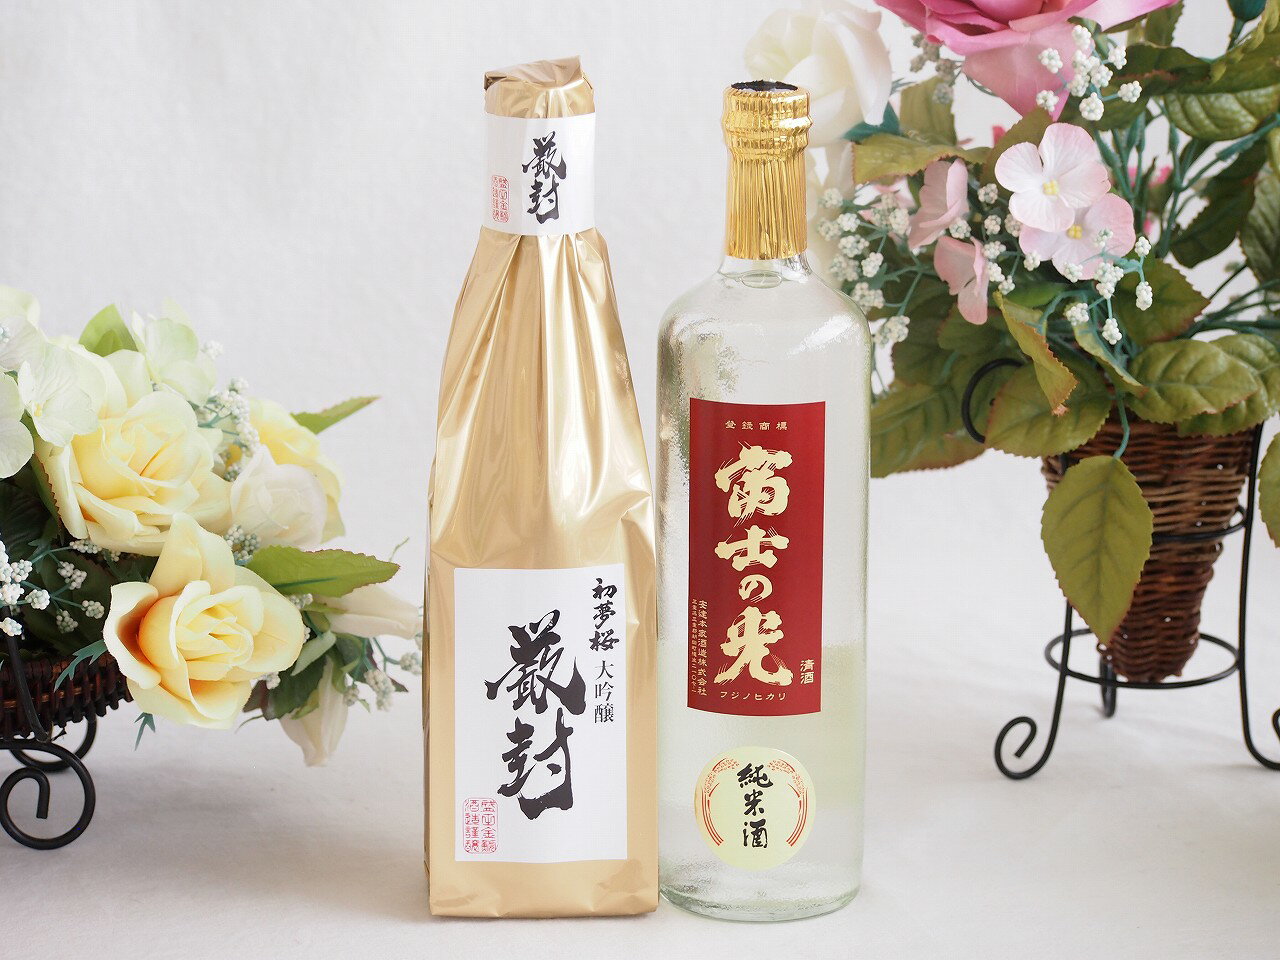 贅沢な日本酒2本セット(金鯱初夢桜 厳封大吟醸(愛知) 富士の光純米(三重)) 720ml×2本